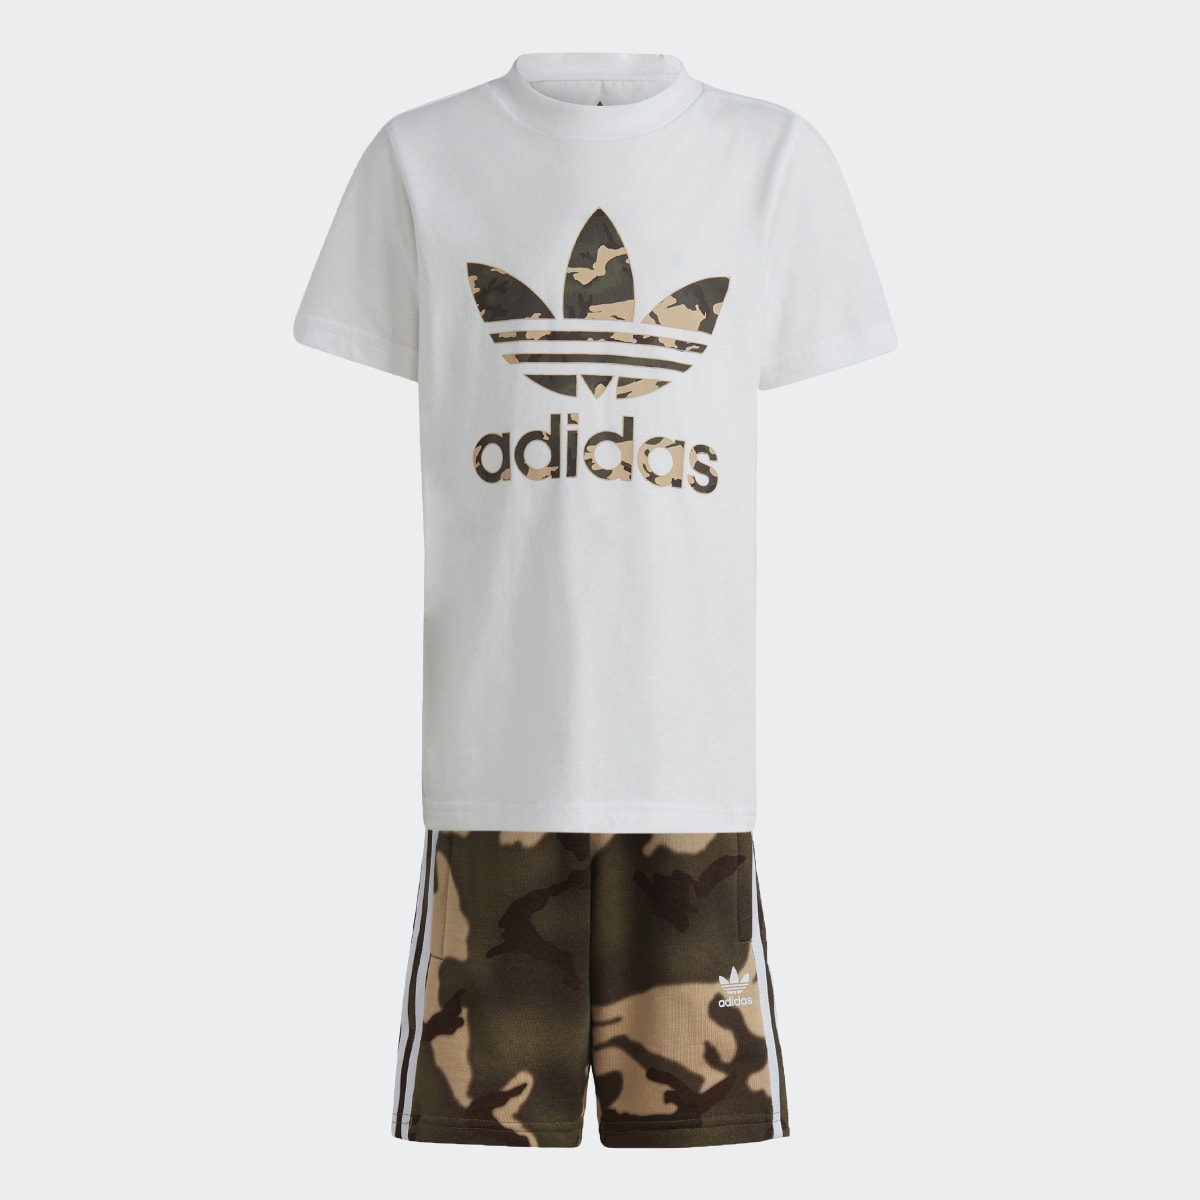 Adidas Camo Shorts and Tee Set. 4